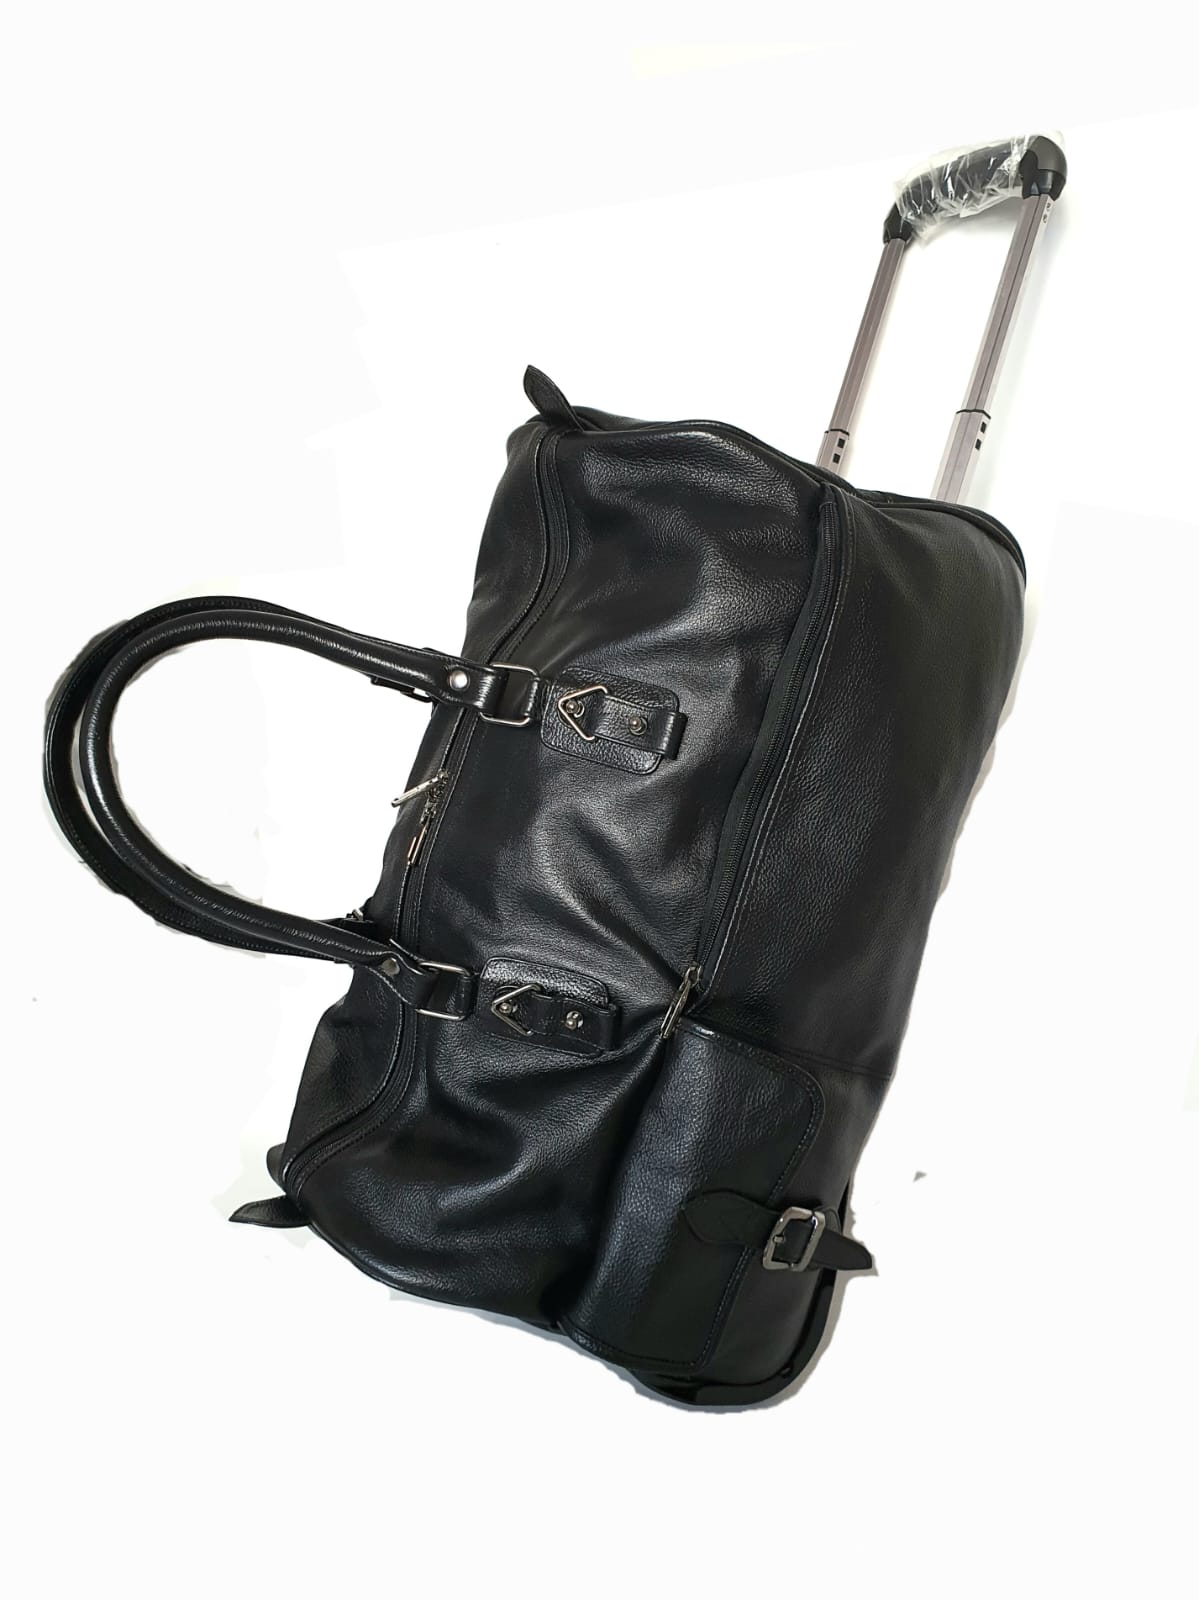 Дорожная сумка унисекс Black Buffalo Pablo черная, 57х27х25 см